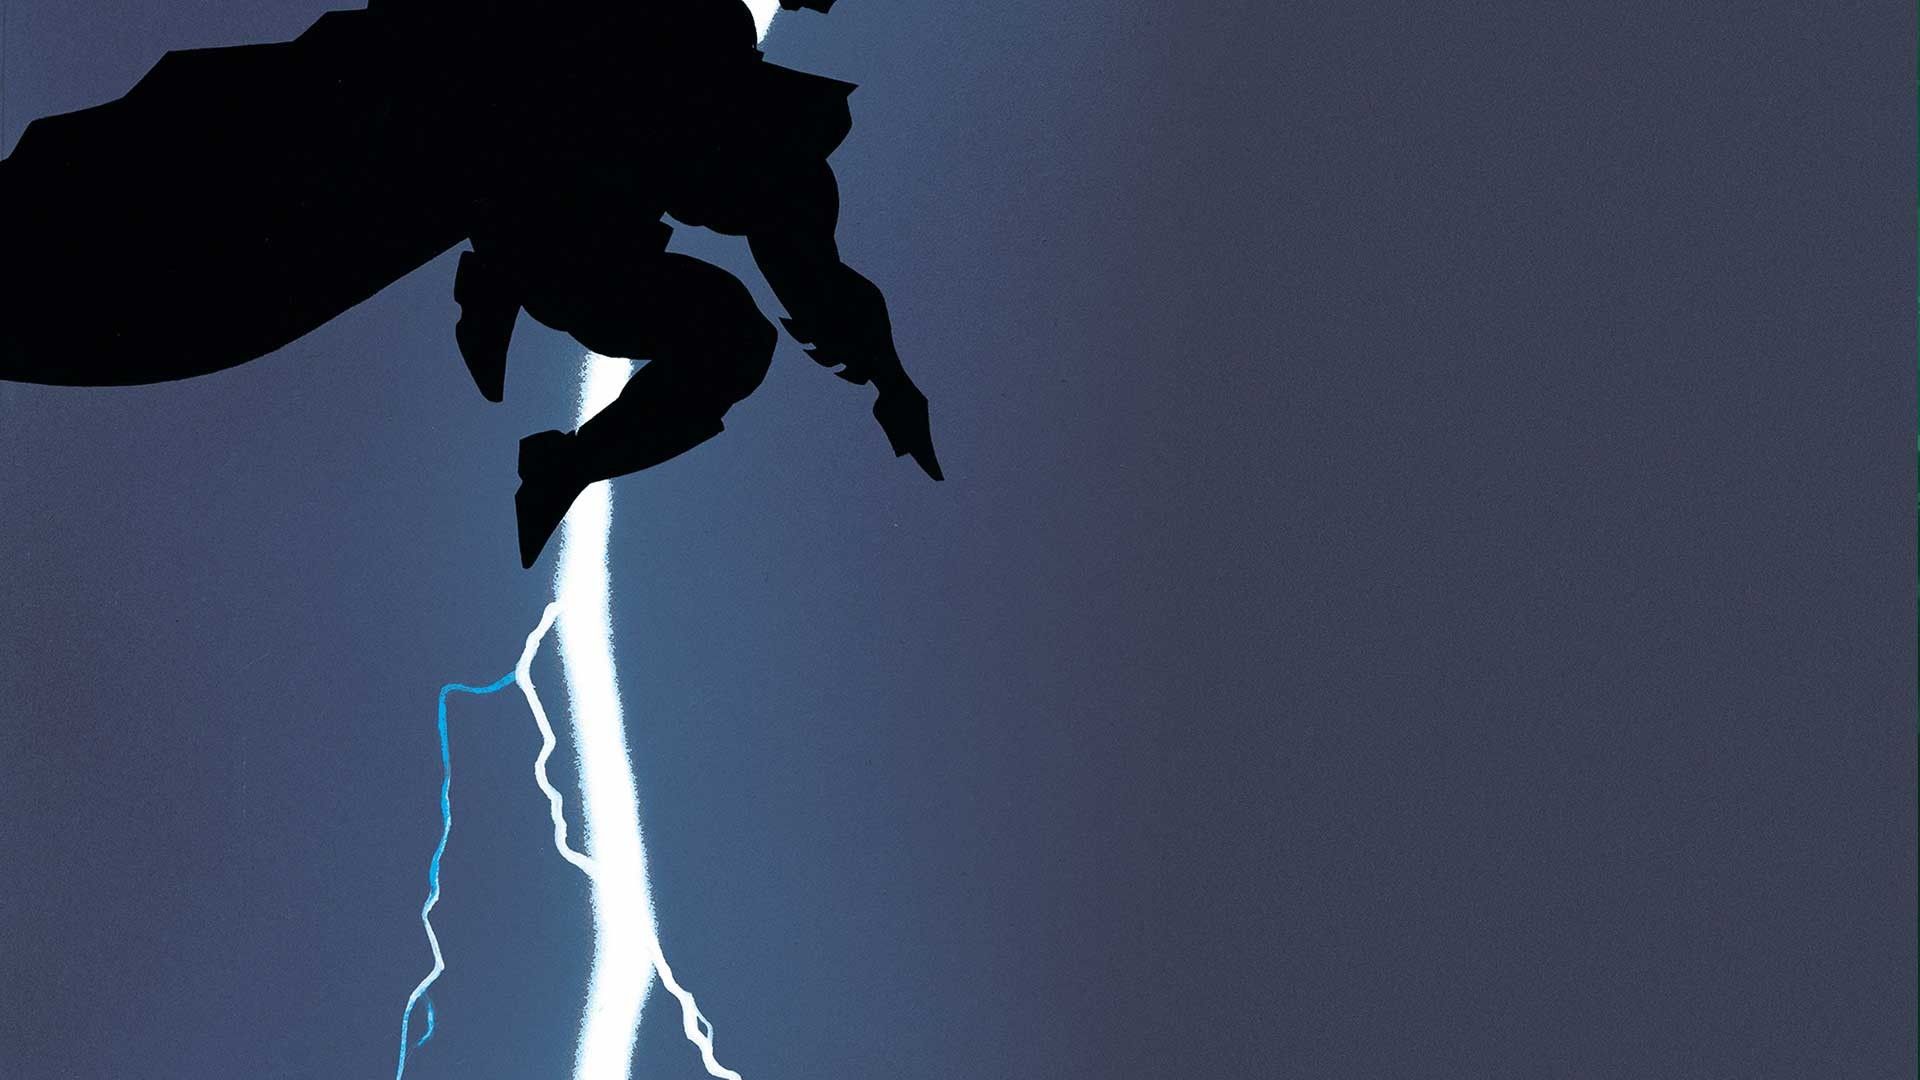 The Dark Knight Returns Wallpaper background picture